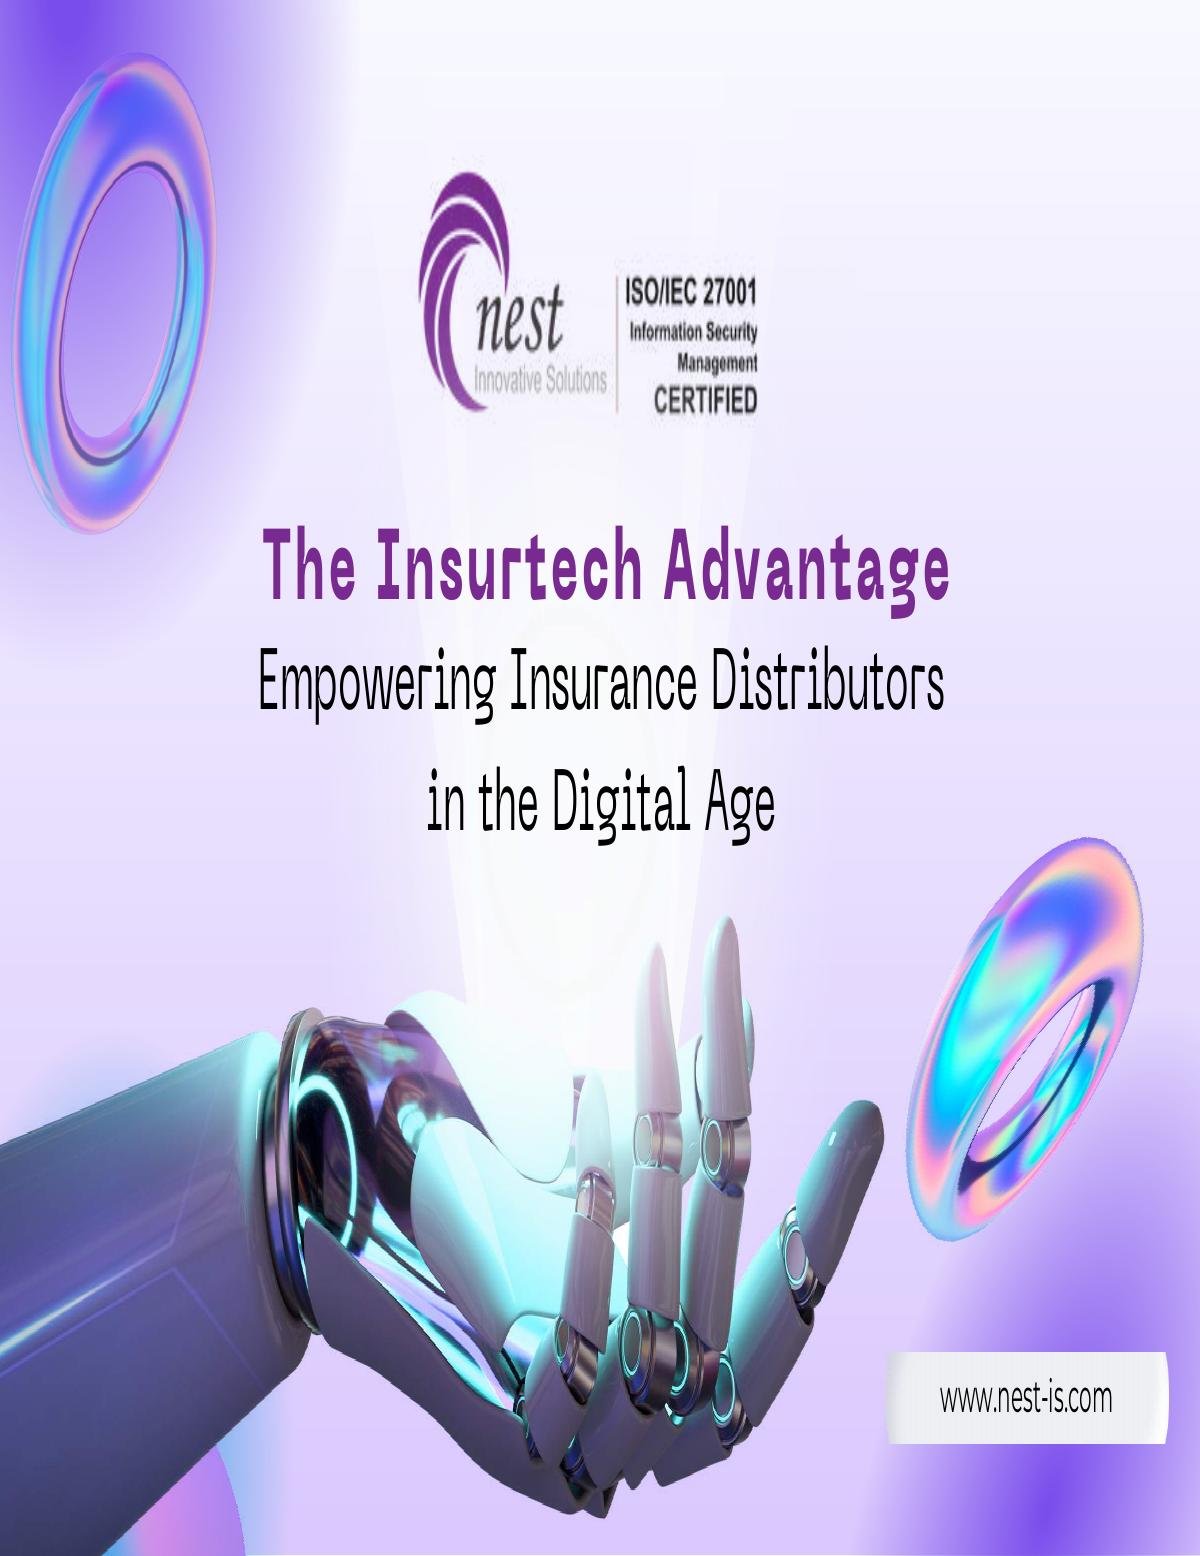 The Insurtech Advantage - Empowering Insurance Distributors in the Digital Age